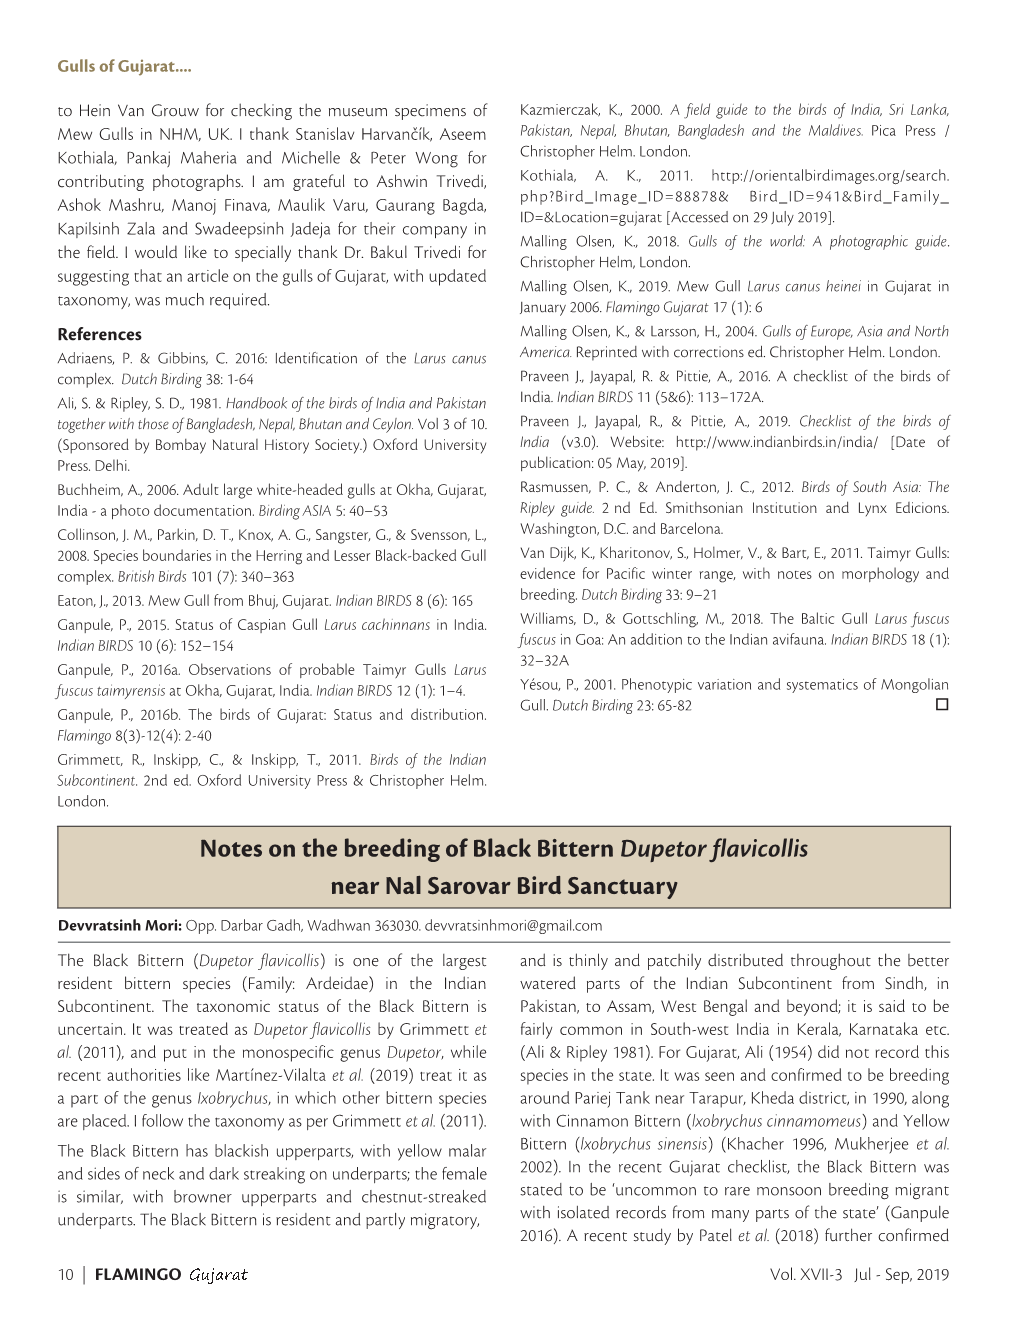 Notes on the Breeding of Black Bittern Dupetor Flavicollis Near Nal Sarovar Bird Sanctuary